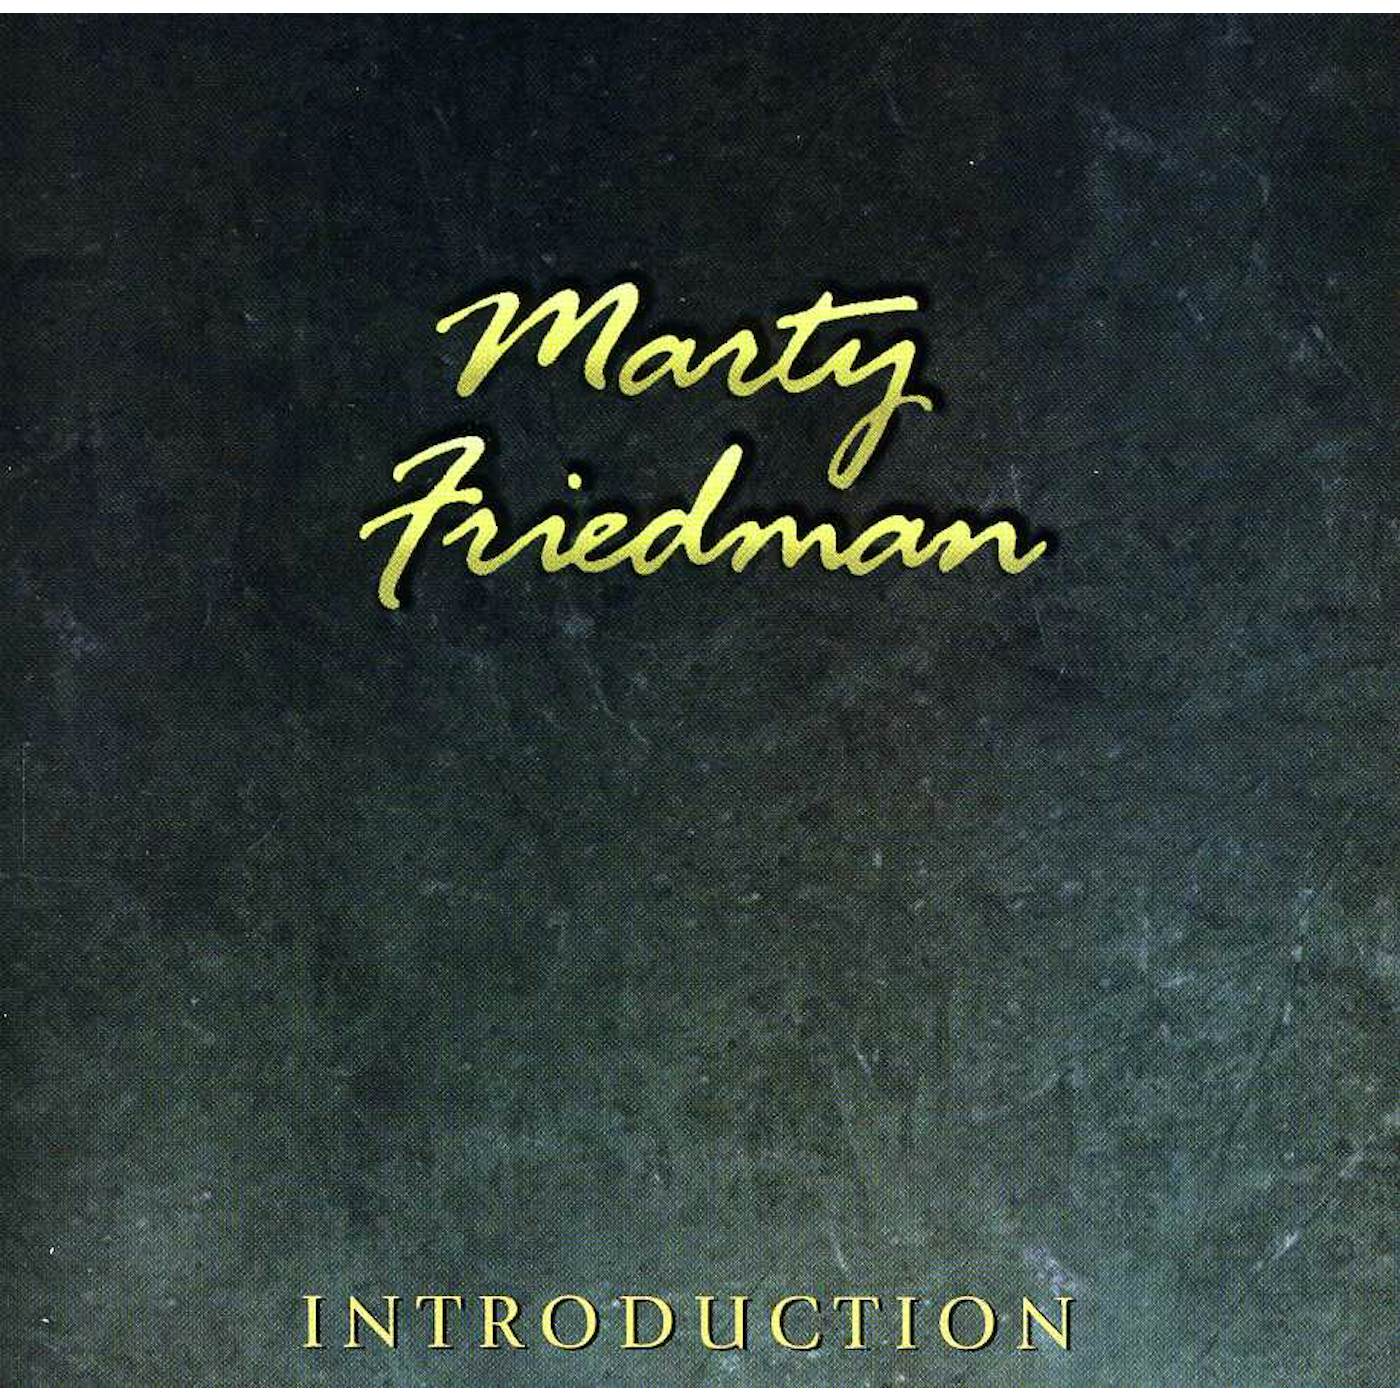 Marty Friedman INTRODUCTION CD